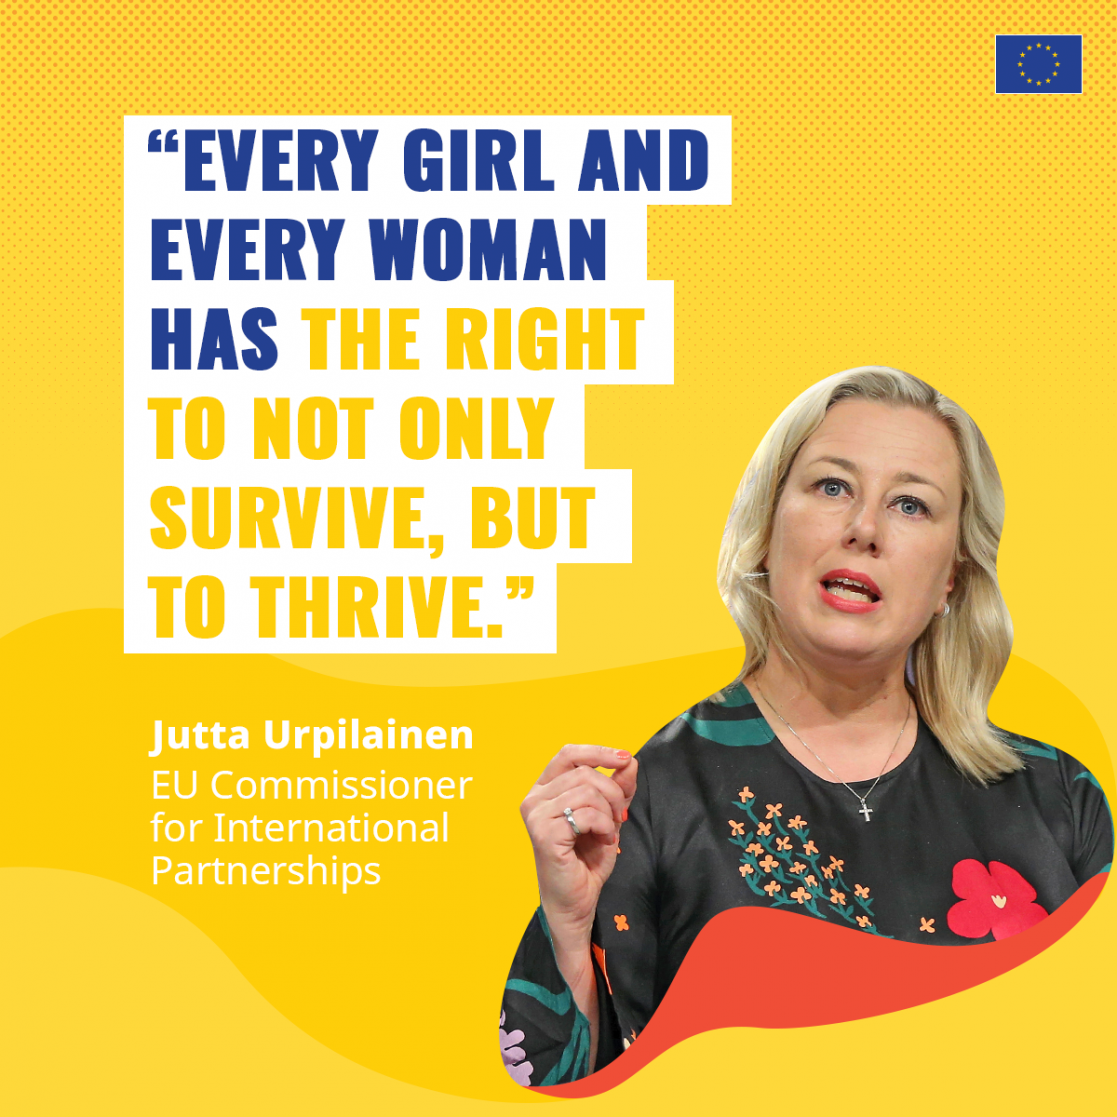 Commissioner Jutta Urpilainen's quote on women rights